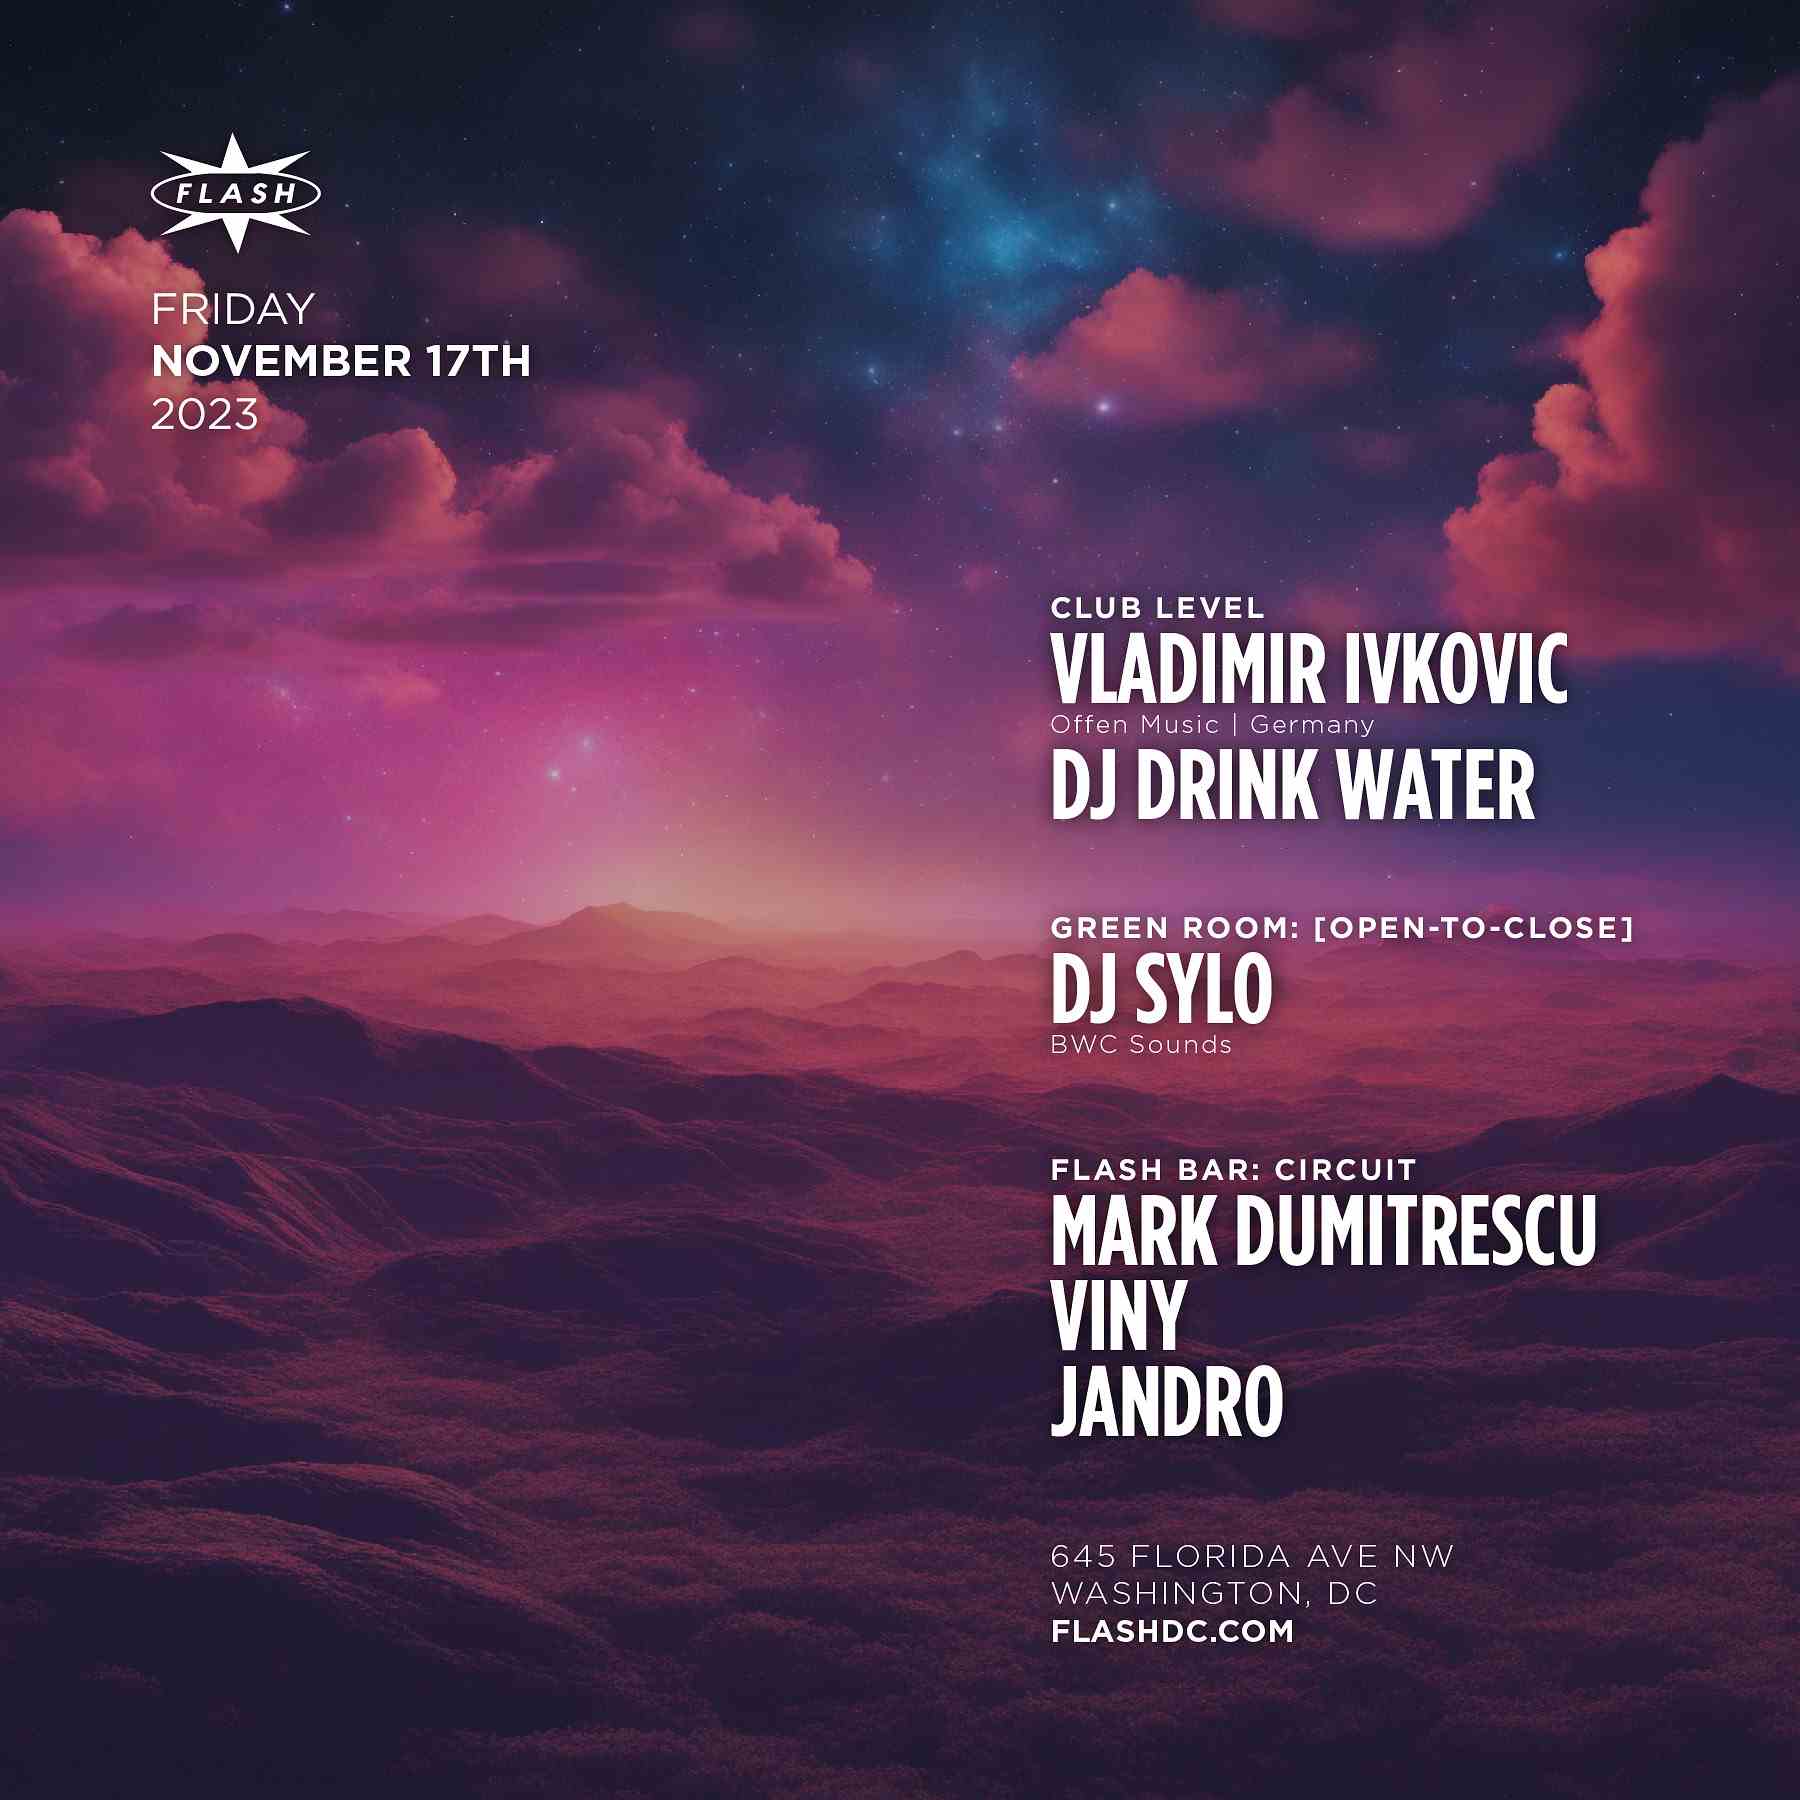 Vladimir Ivkovic event flyer